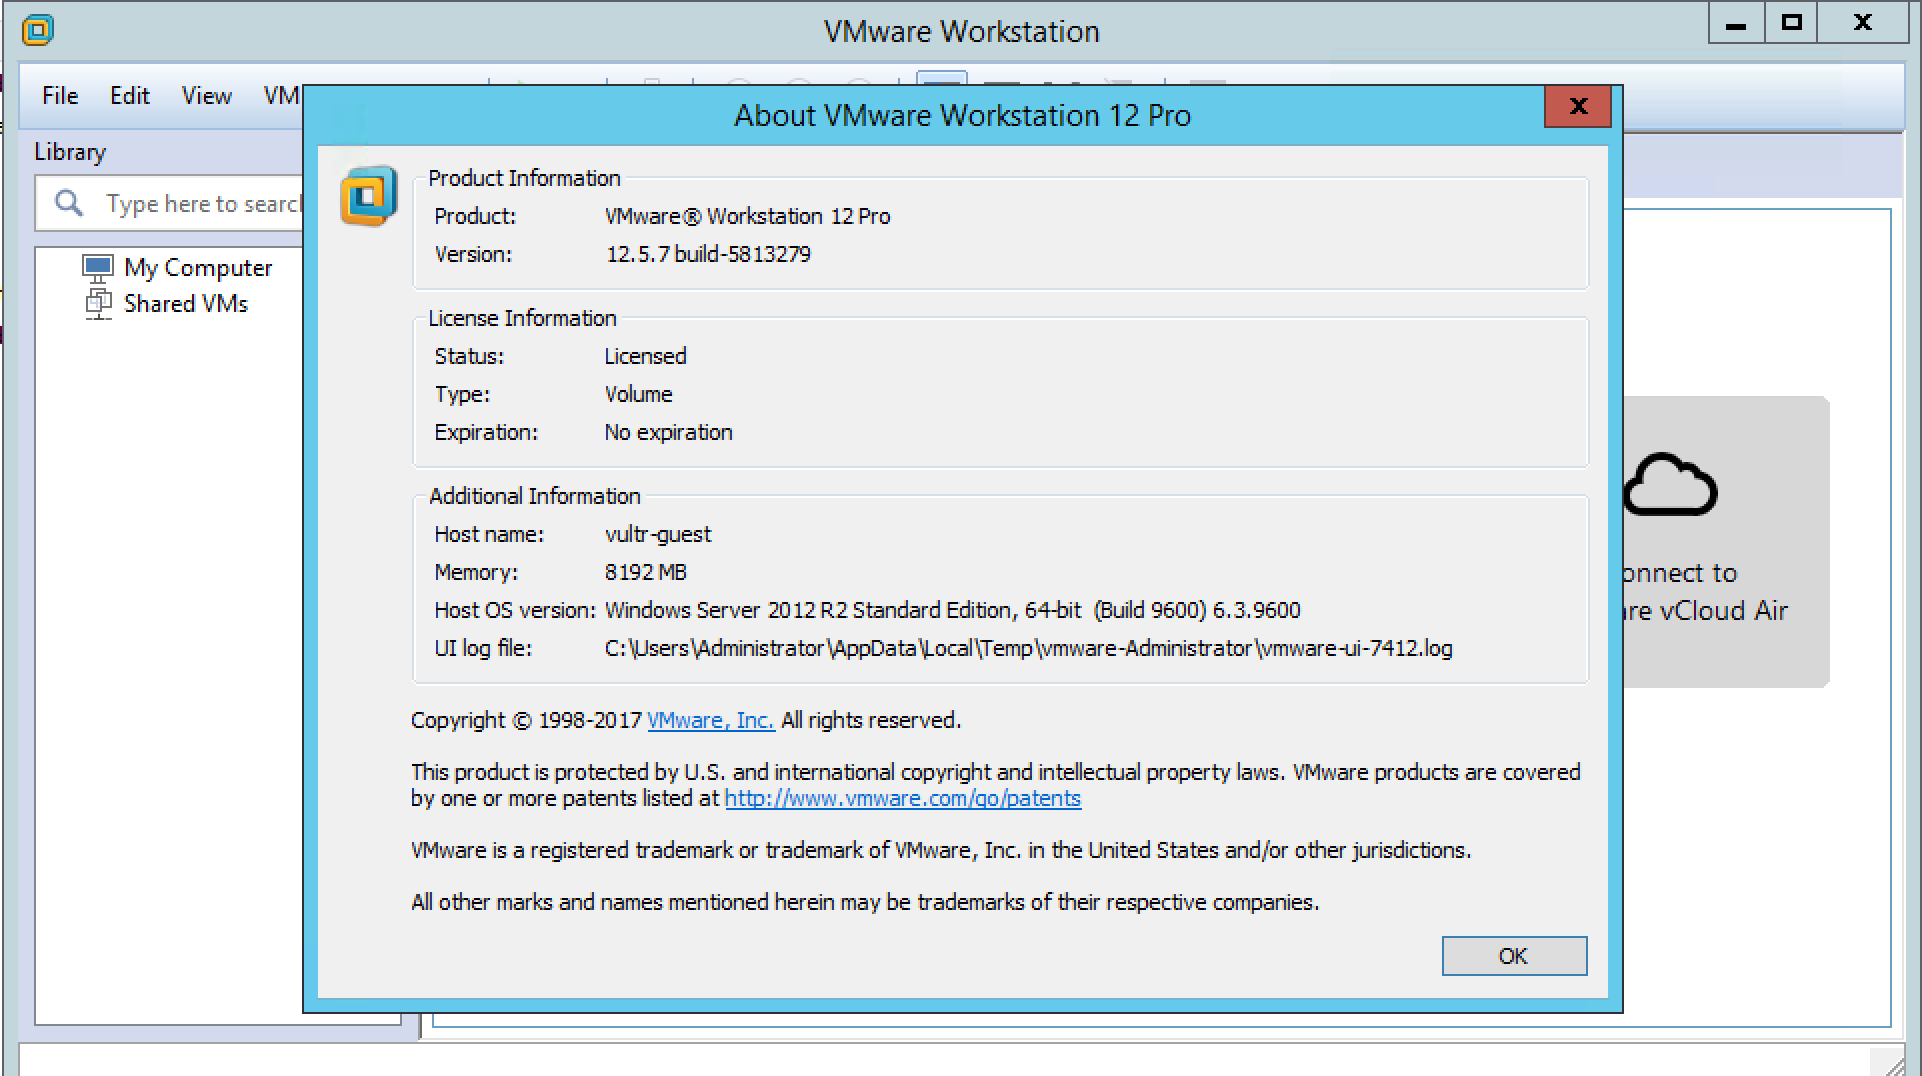 download vmware workstation 6.5 serial key